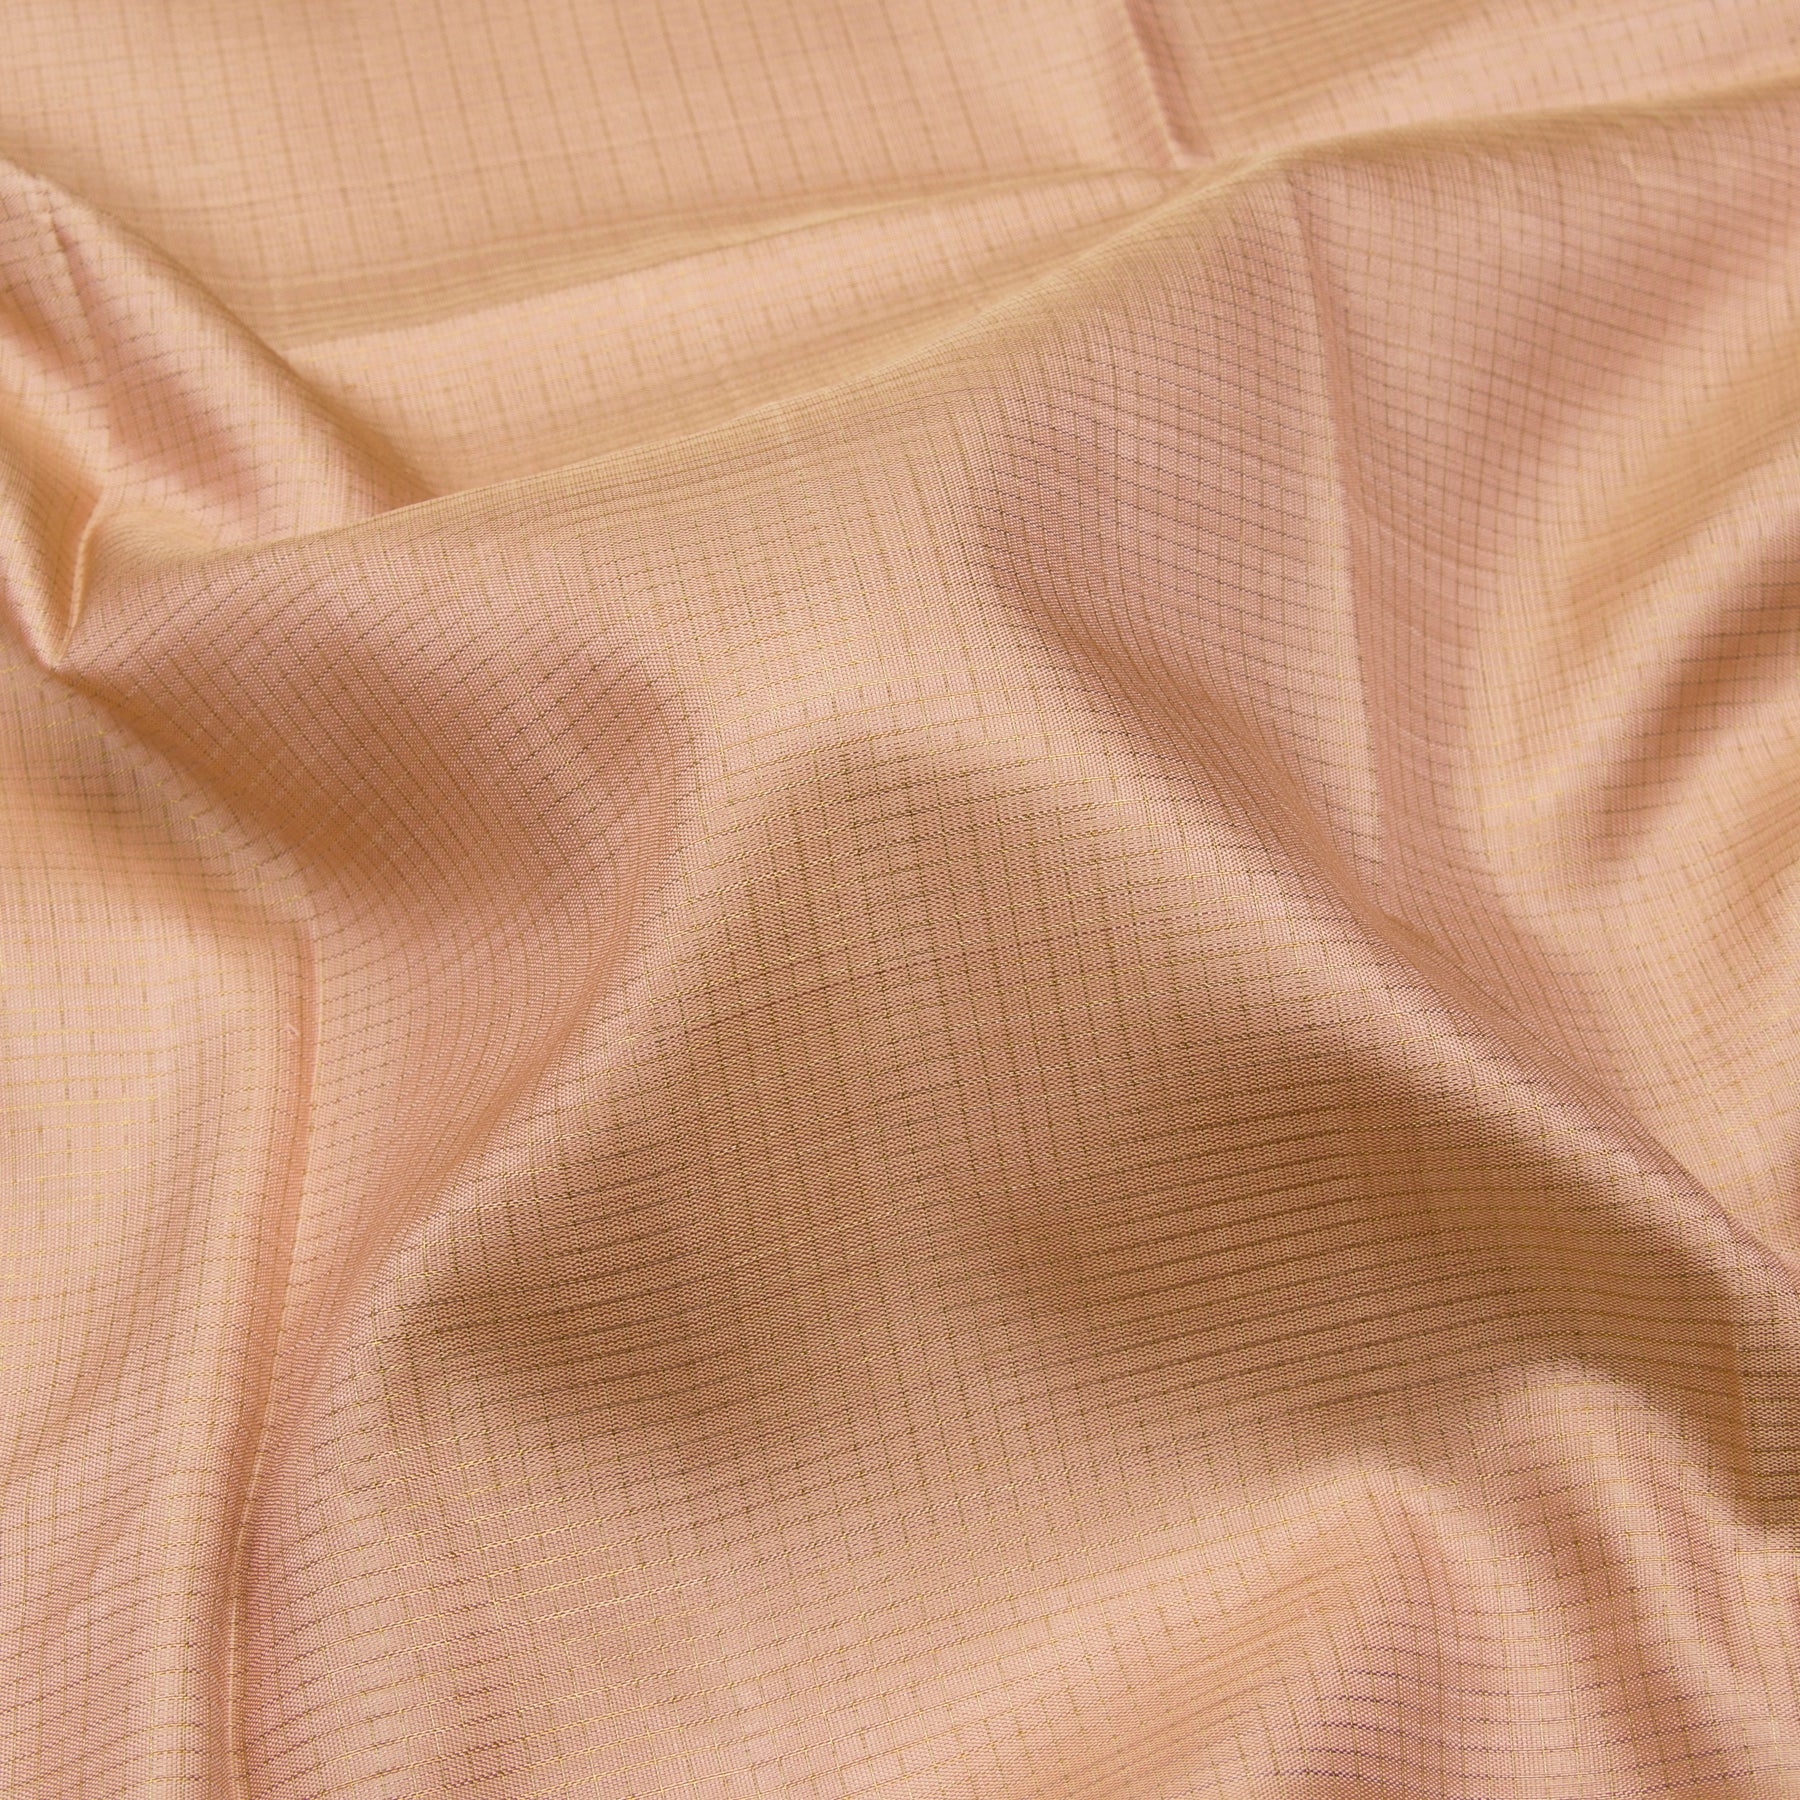 Kanakavalli Kattam - Vari Silk Blouse Length 22-609-HB001-05356 - Fabric View